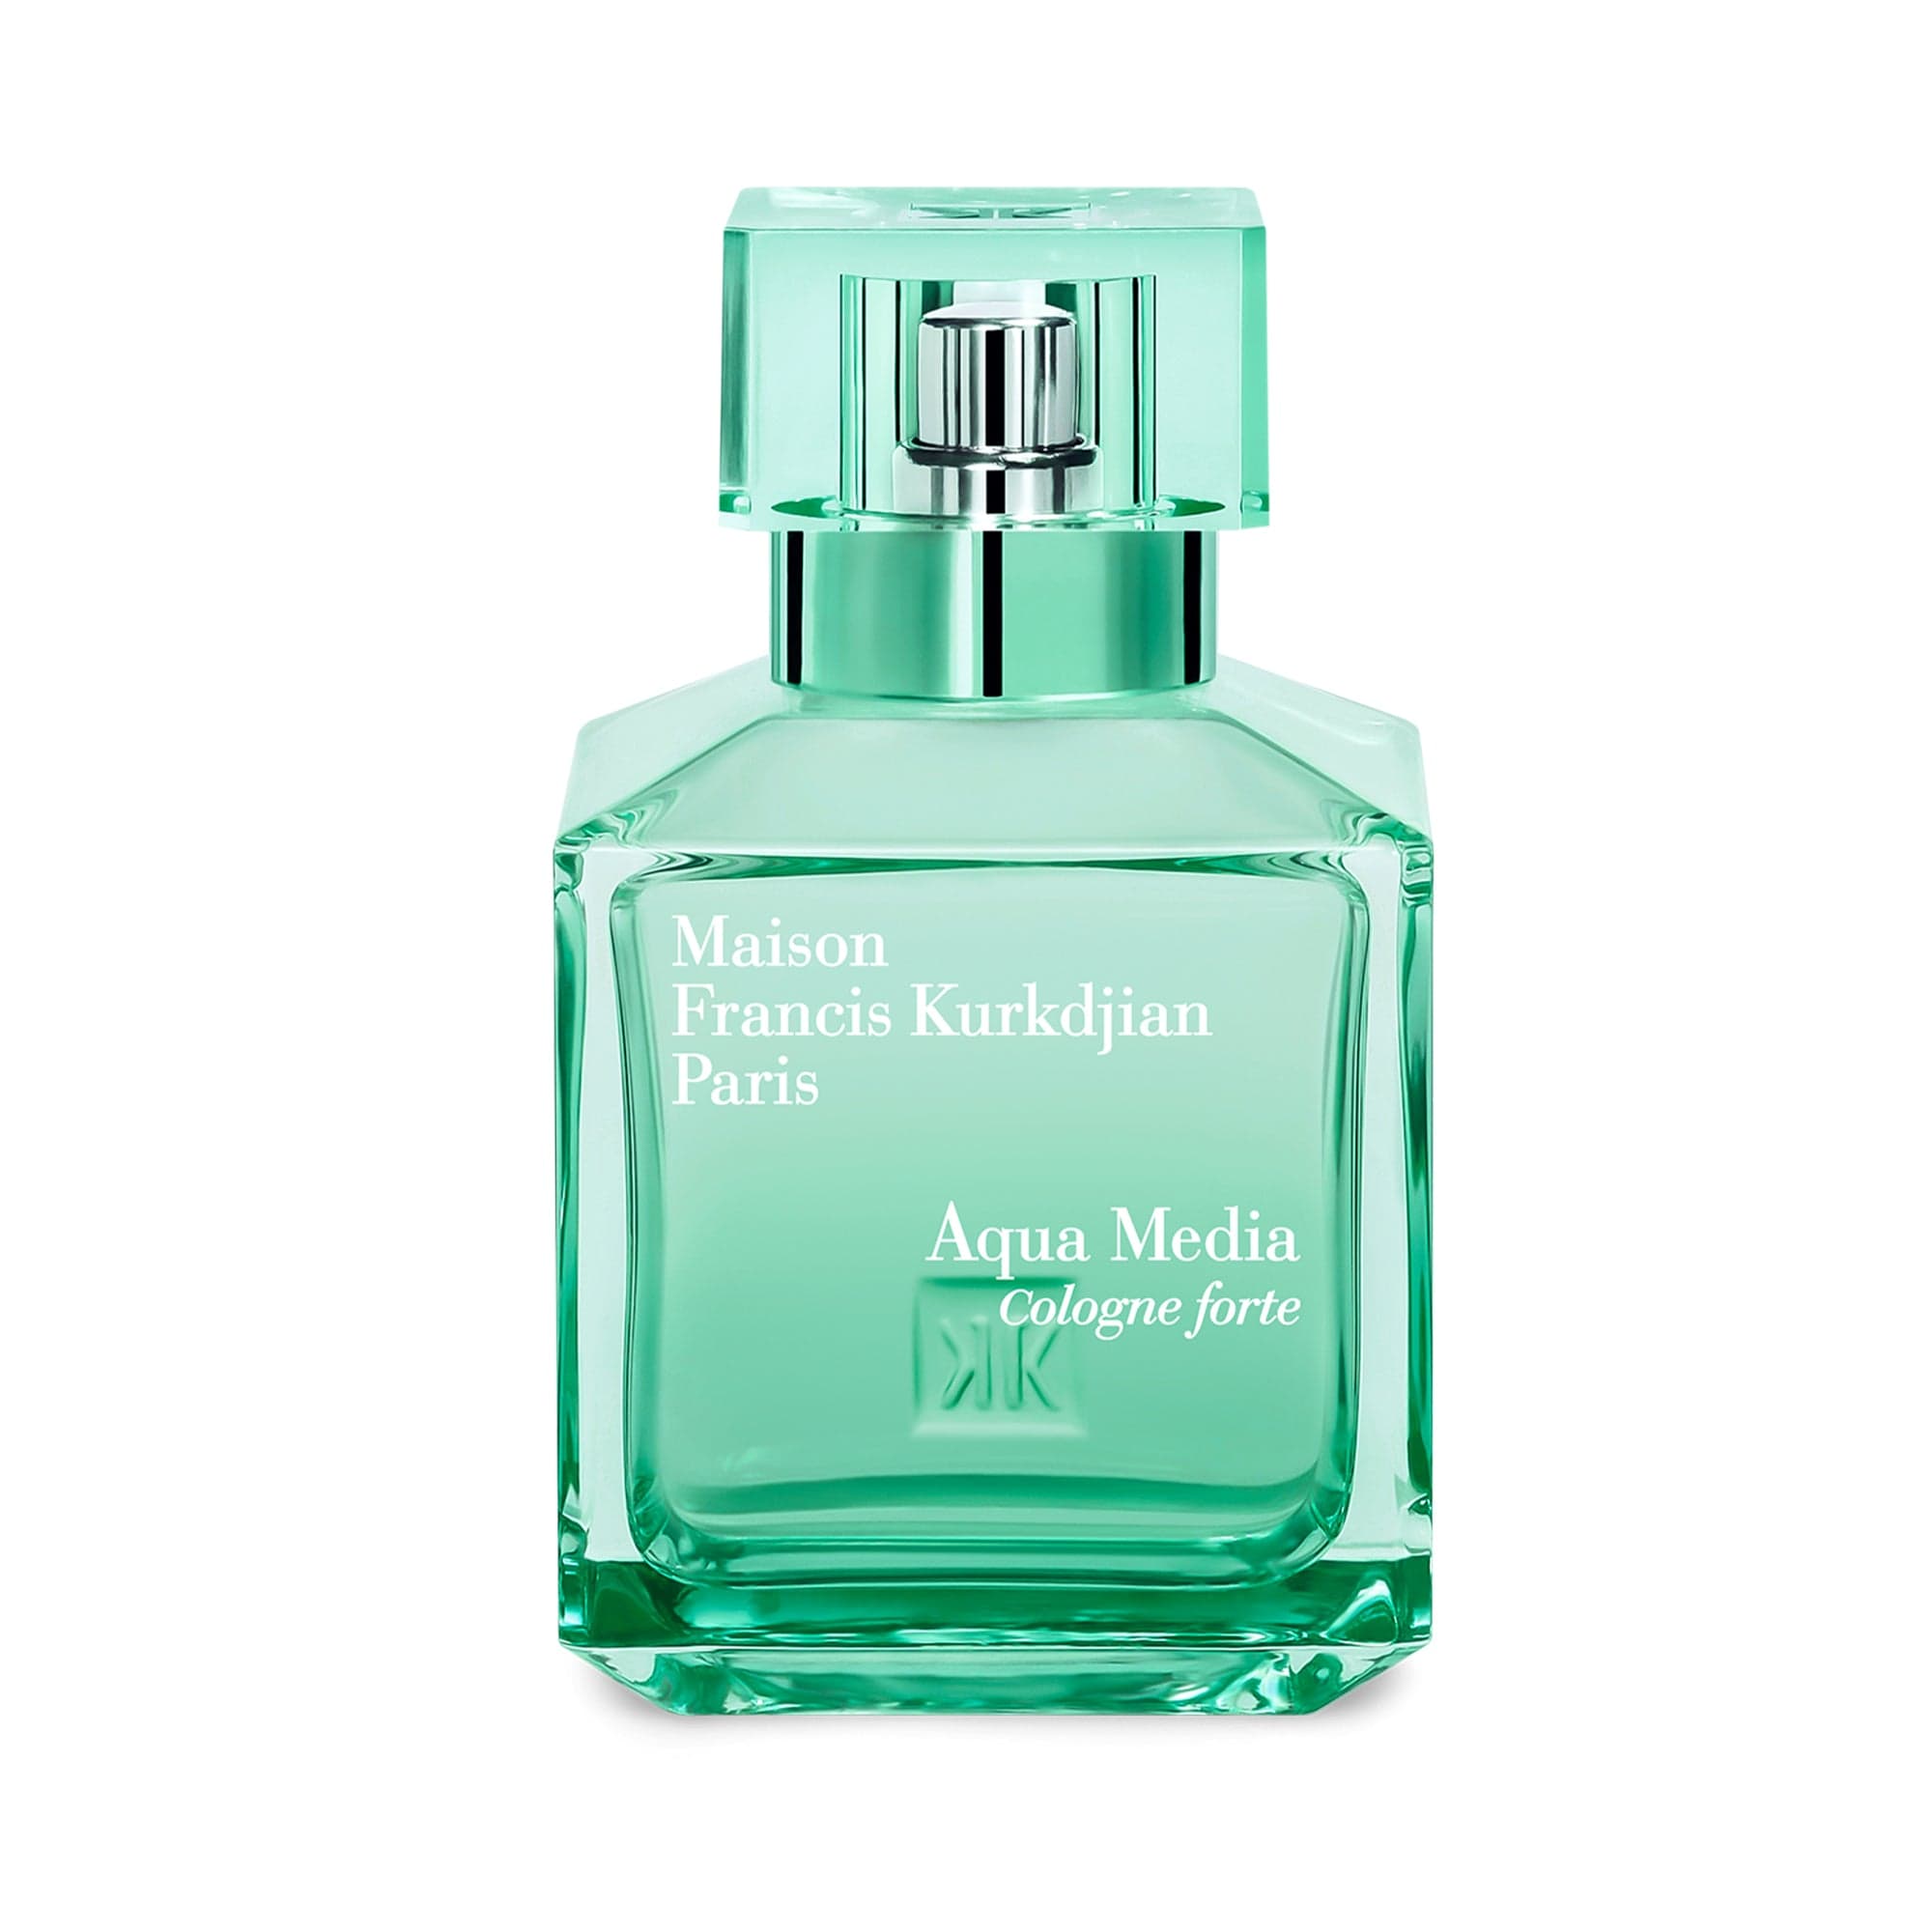 Aqua Media Cologne Forte de Maison Francis Kurkdjian Eau de Parfum